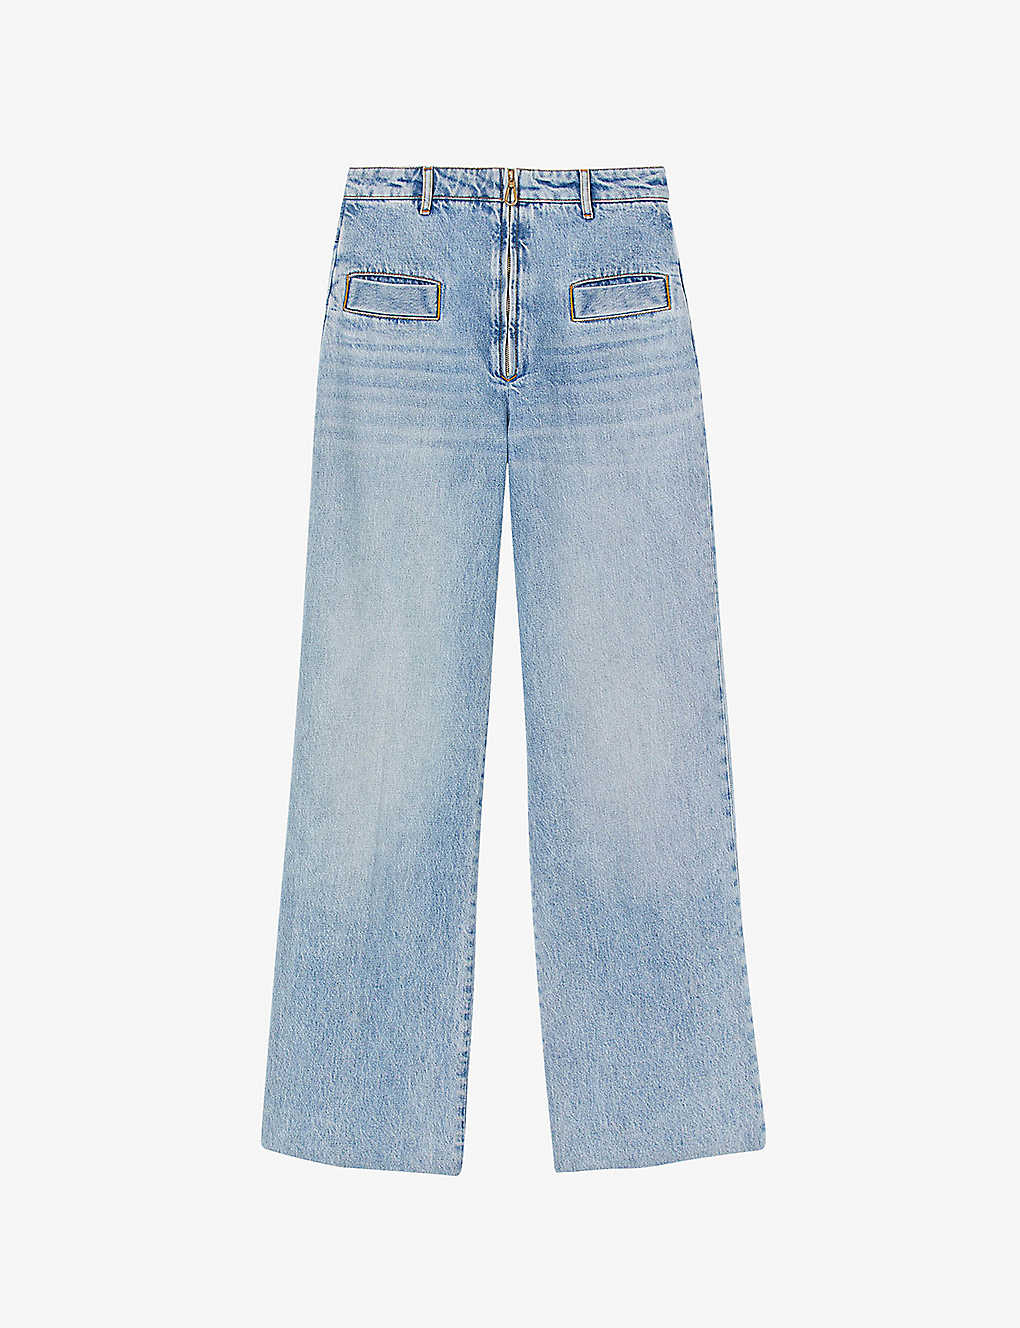 Sandro Oslo High Waist Cotton Denim Jeans In Blue Jean